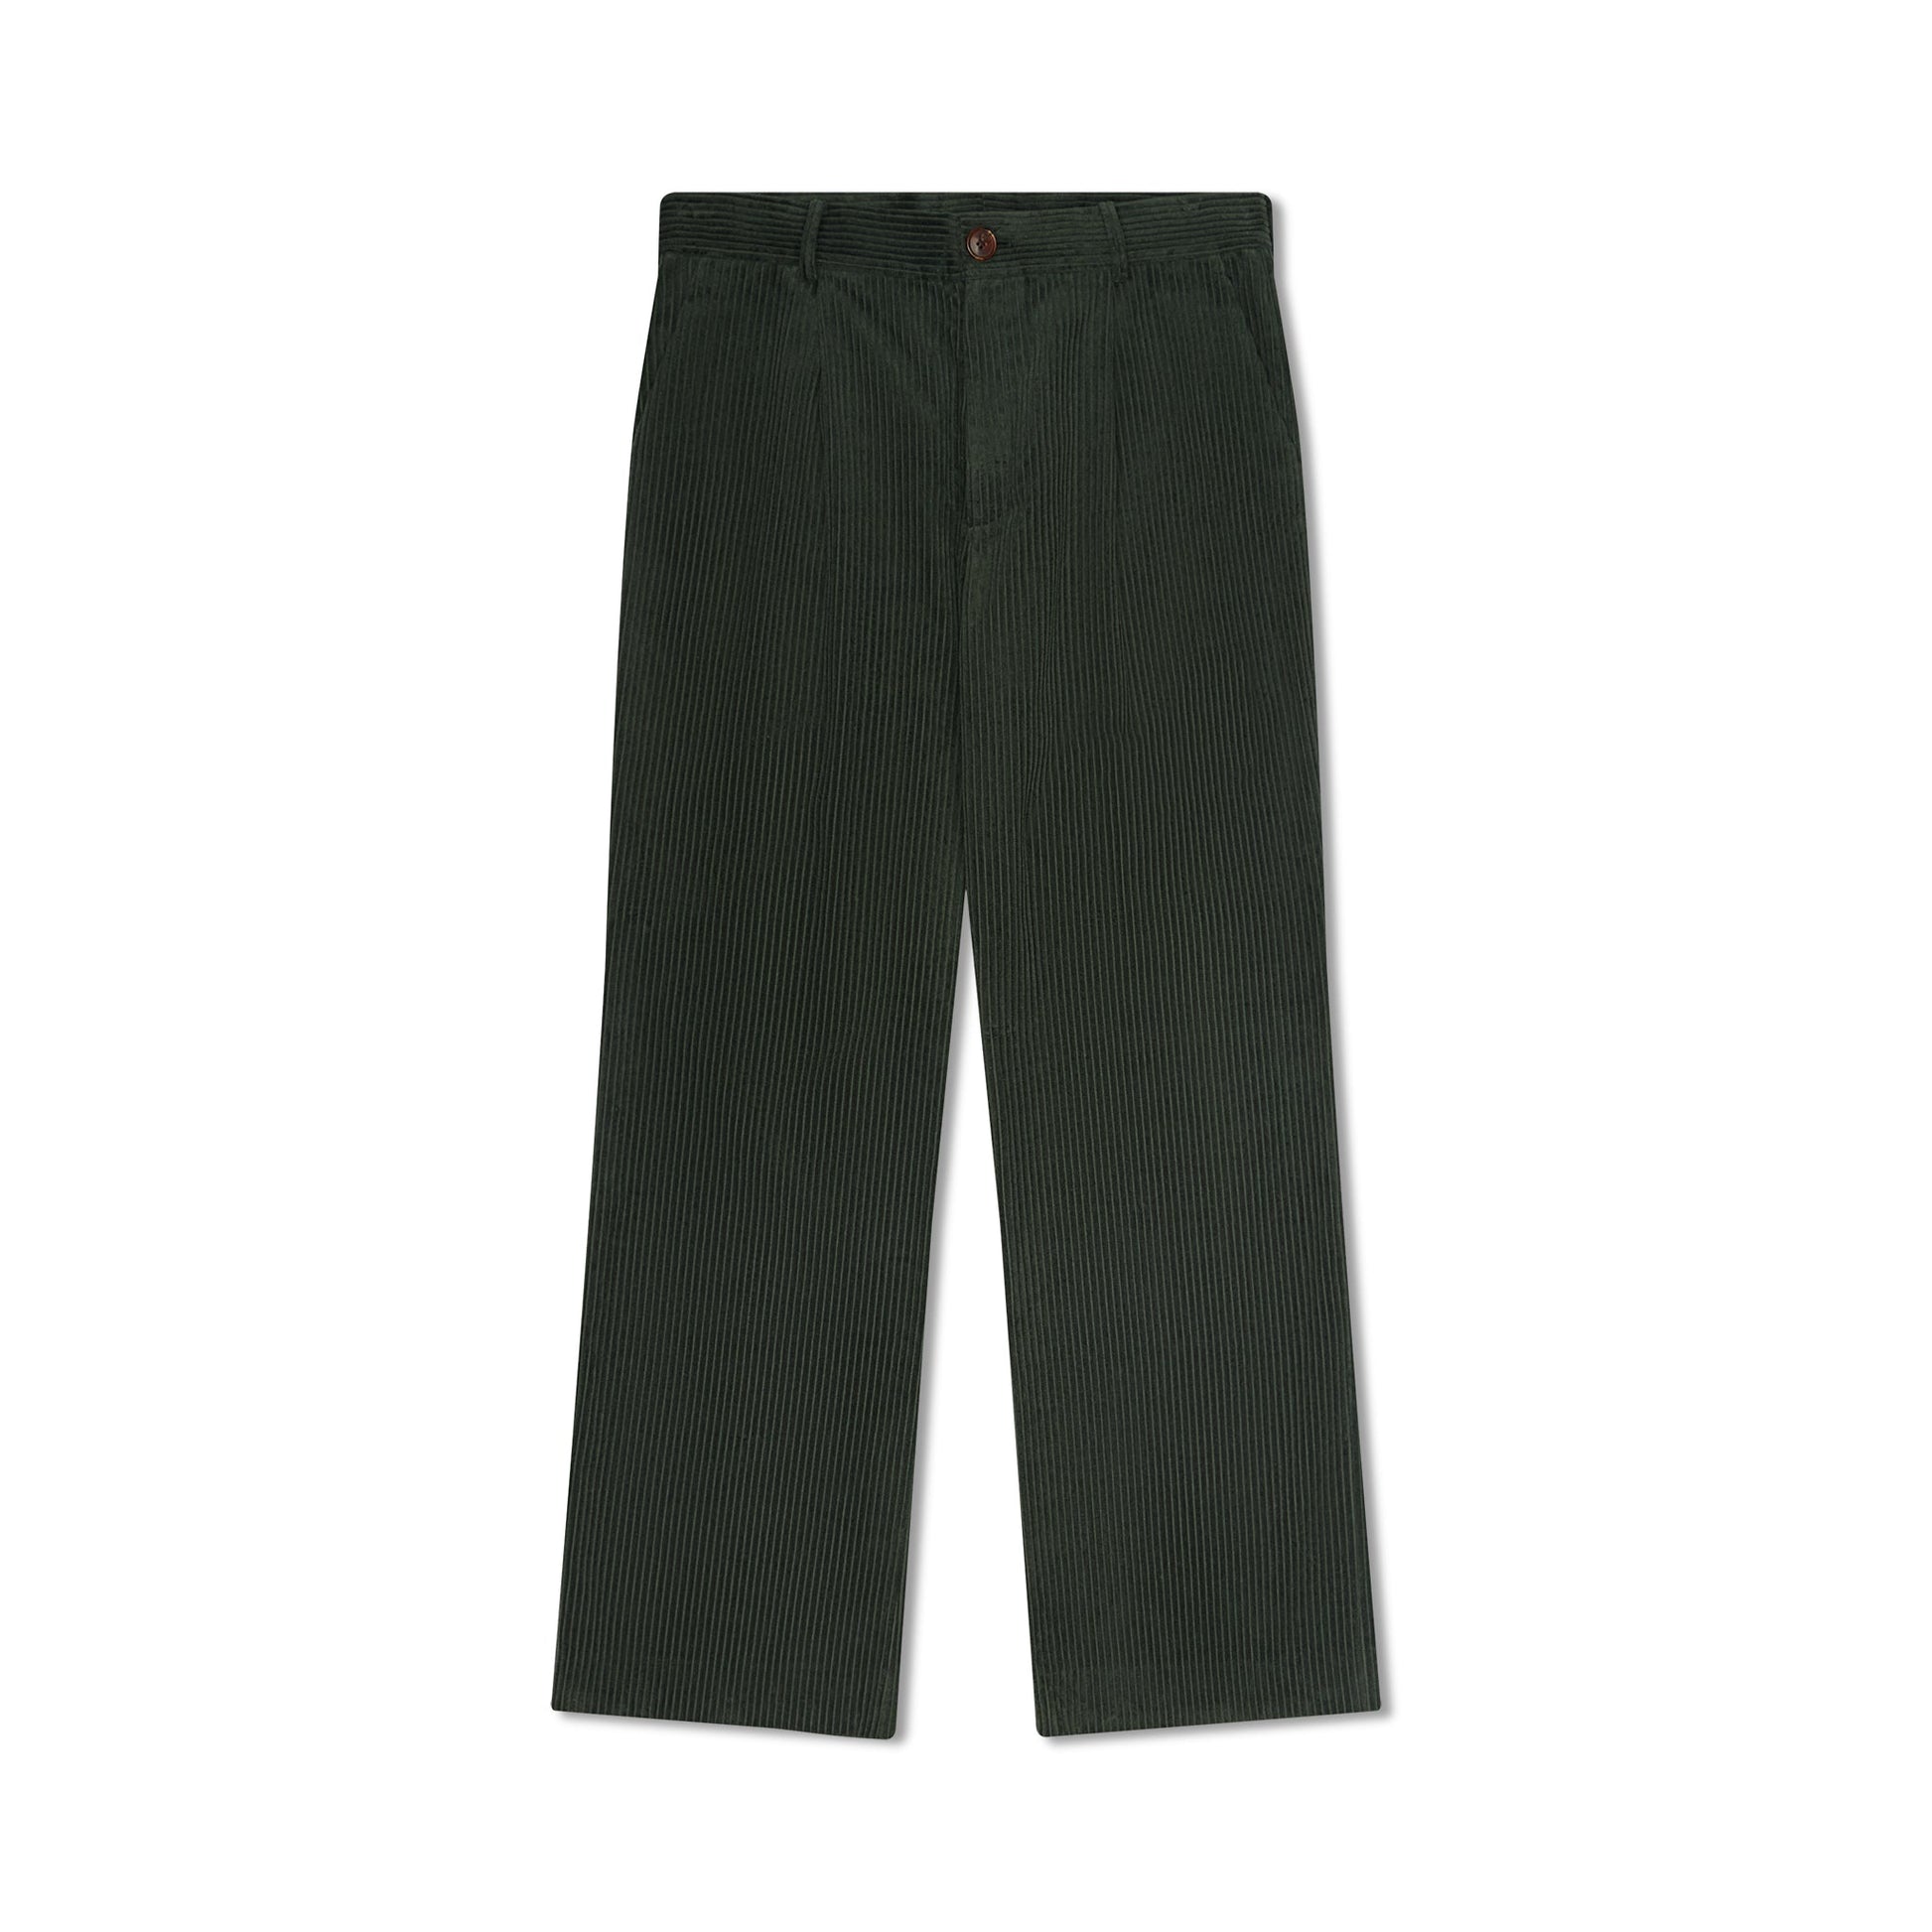 Green Corduroy Pants - Minted New York